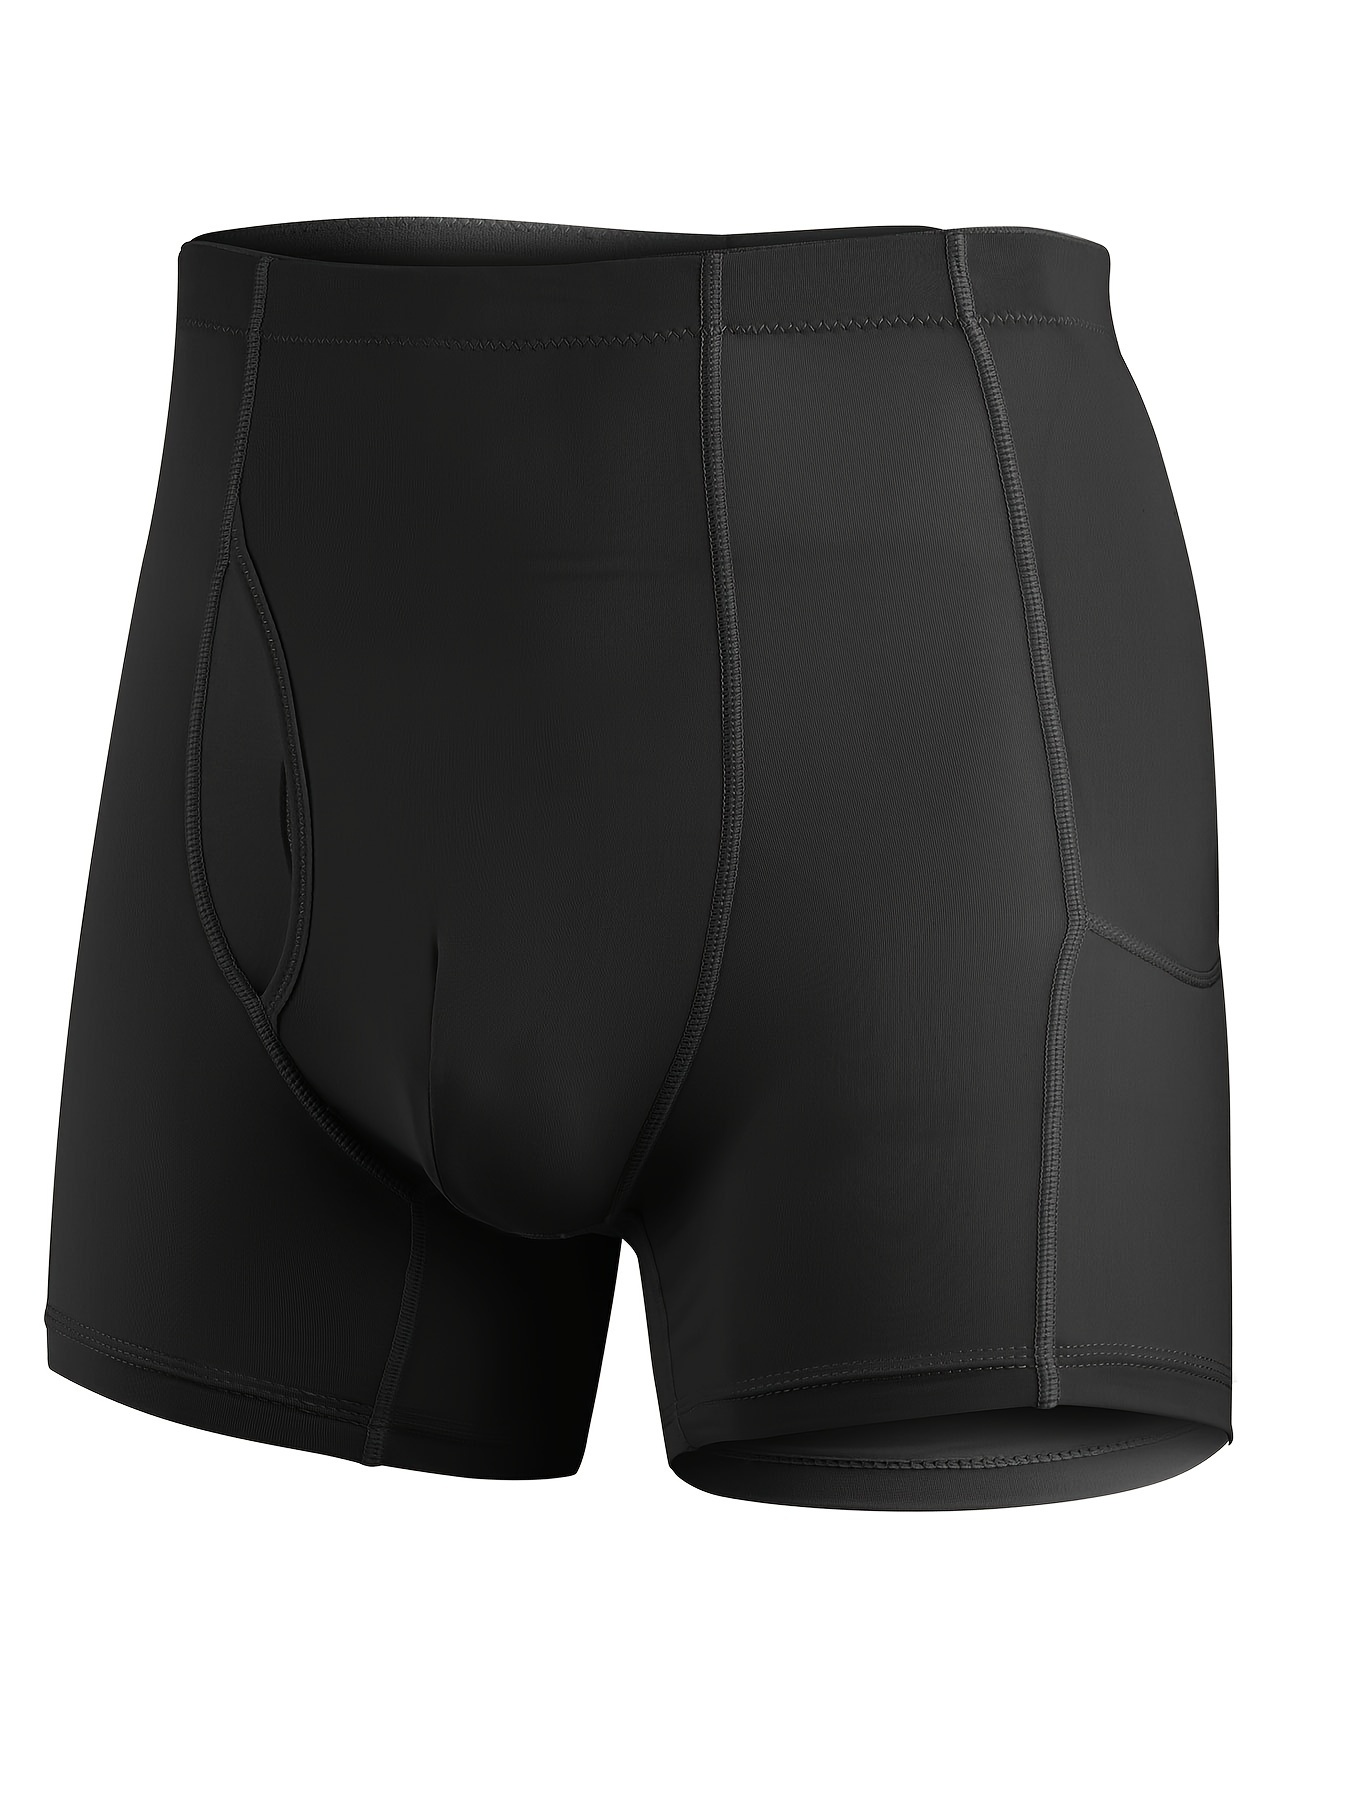 JUNLAN Men's Body Shaper Hip Enhance Underwear, Basic Boxer Briefs, Tummy  Control Butt Lifter Shorts With Removable Pad